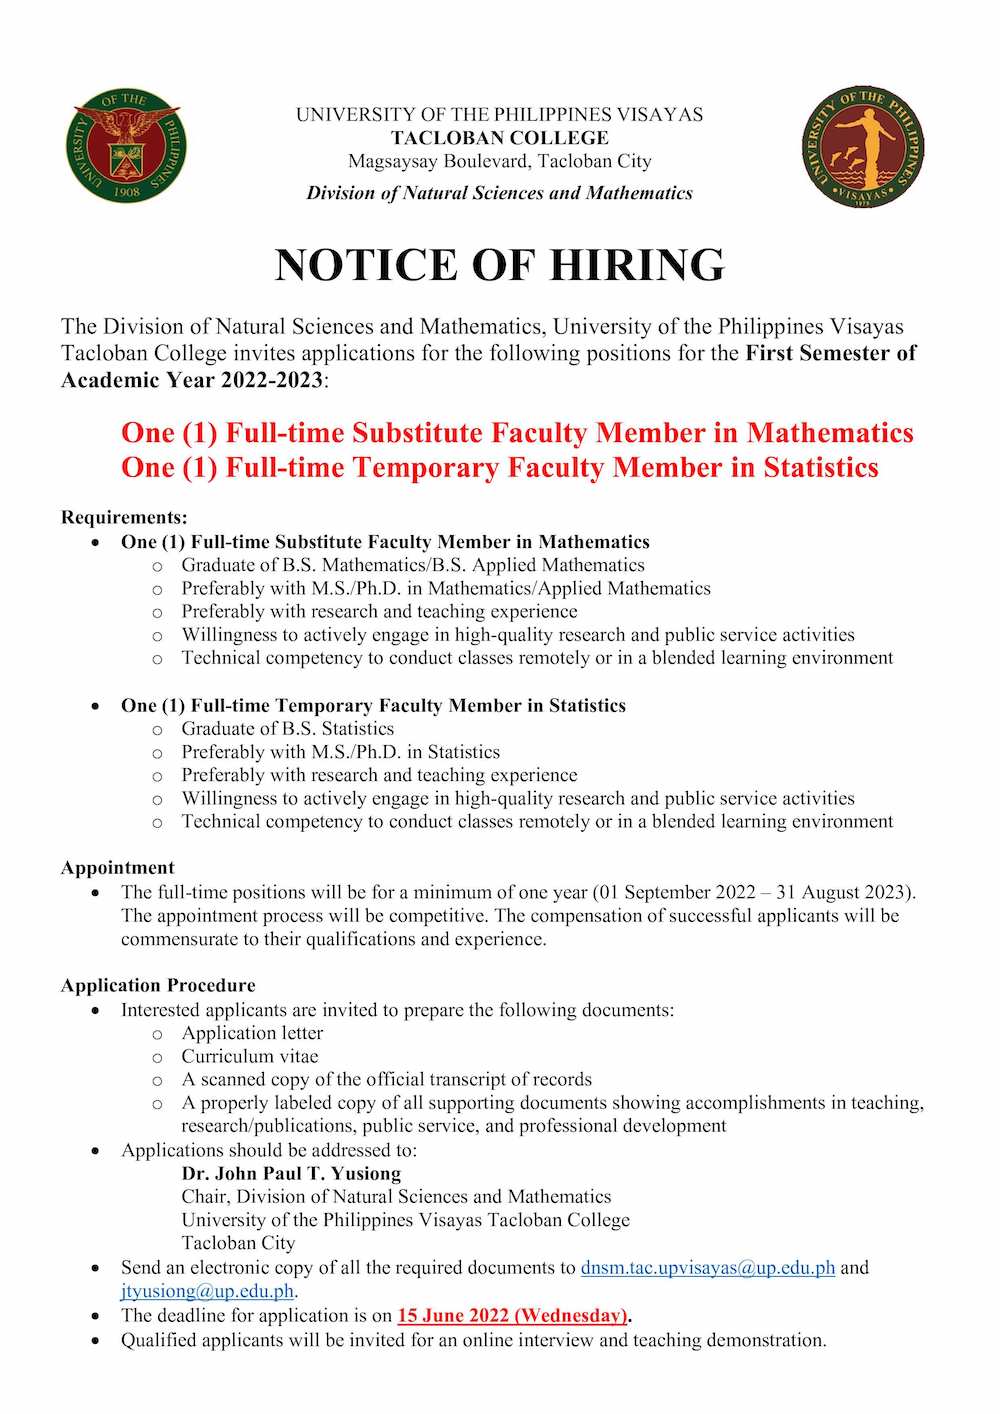 hiring upvtc statmath faculty 0622